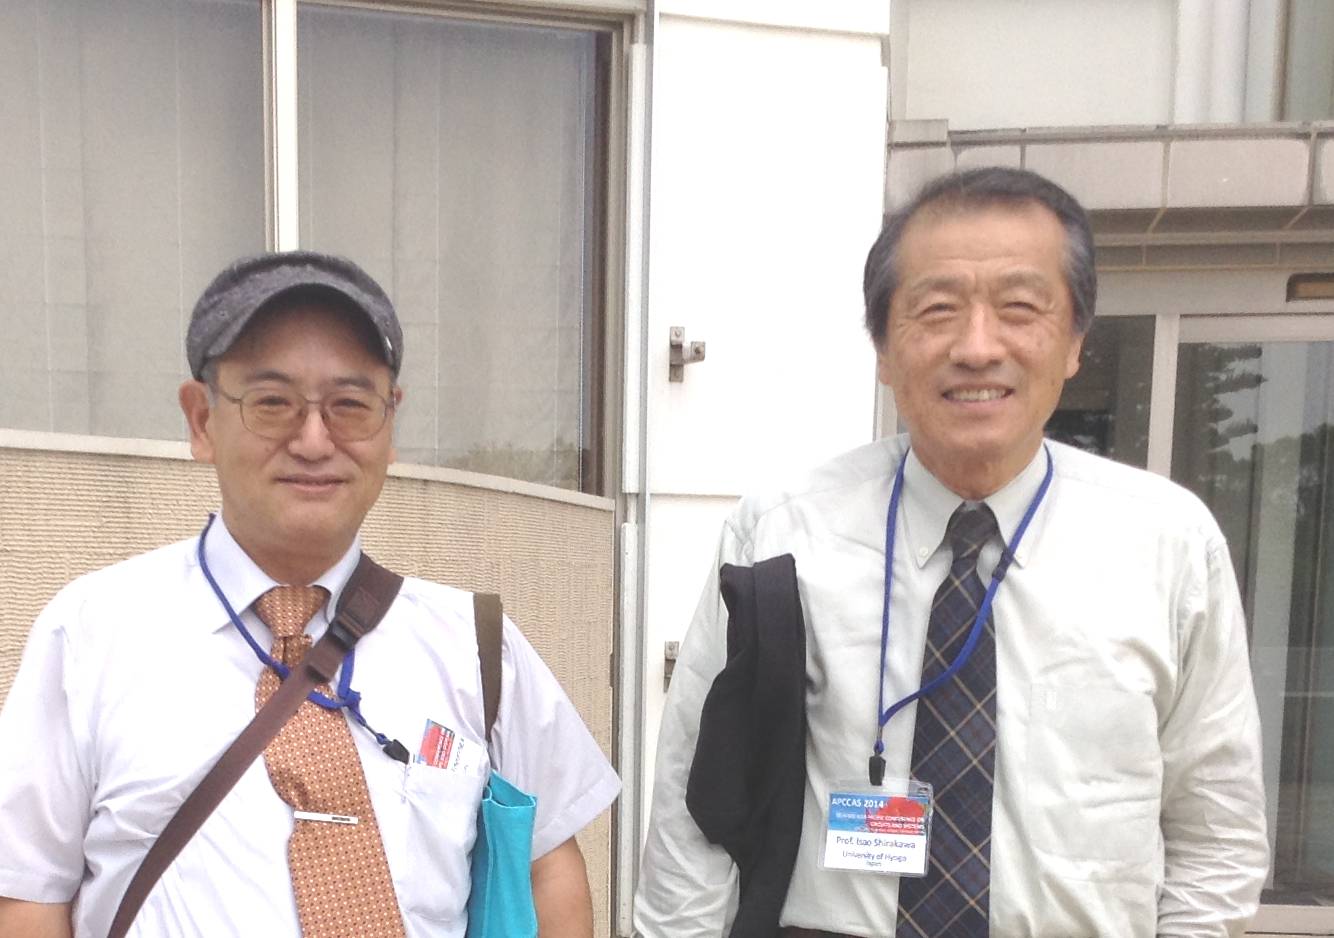 I and Prof. Isao Shirakawa